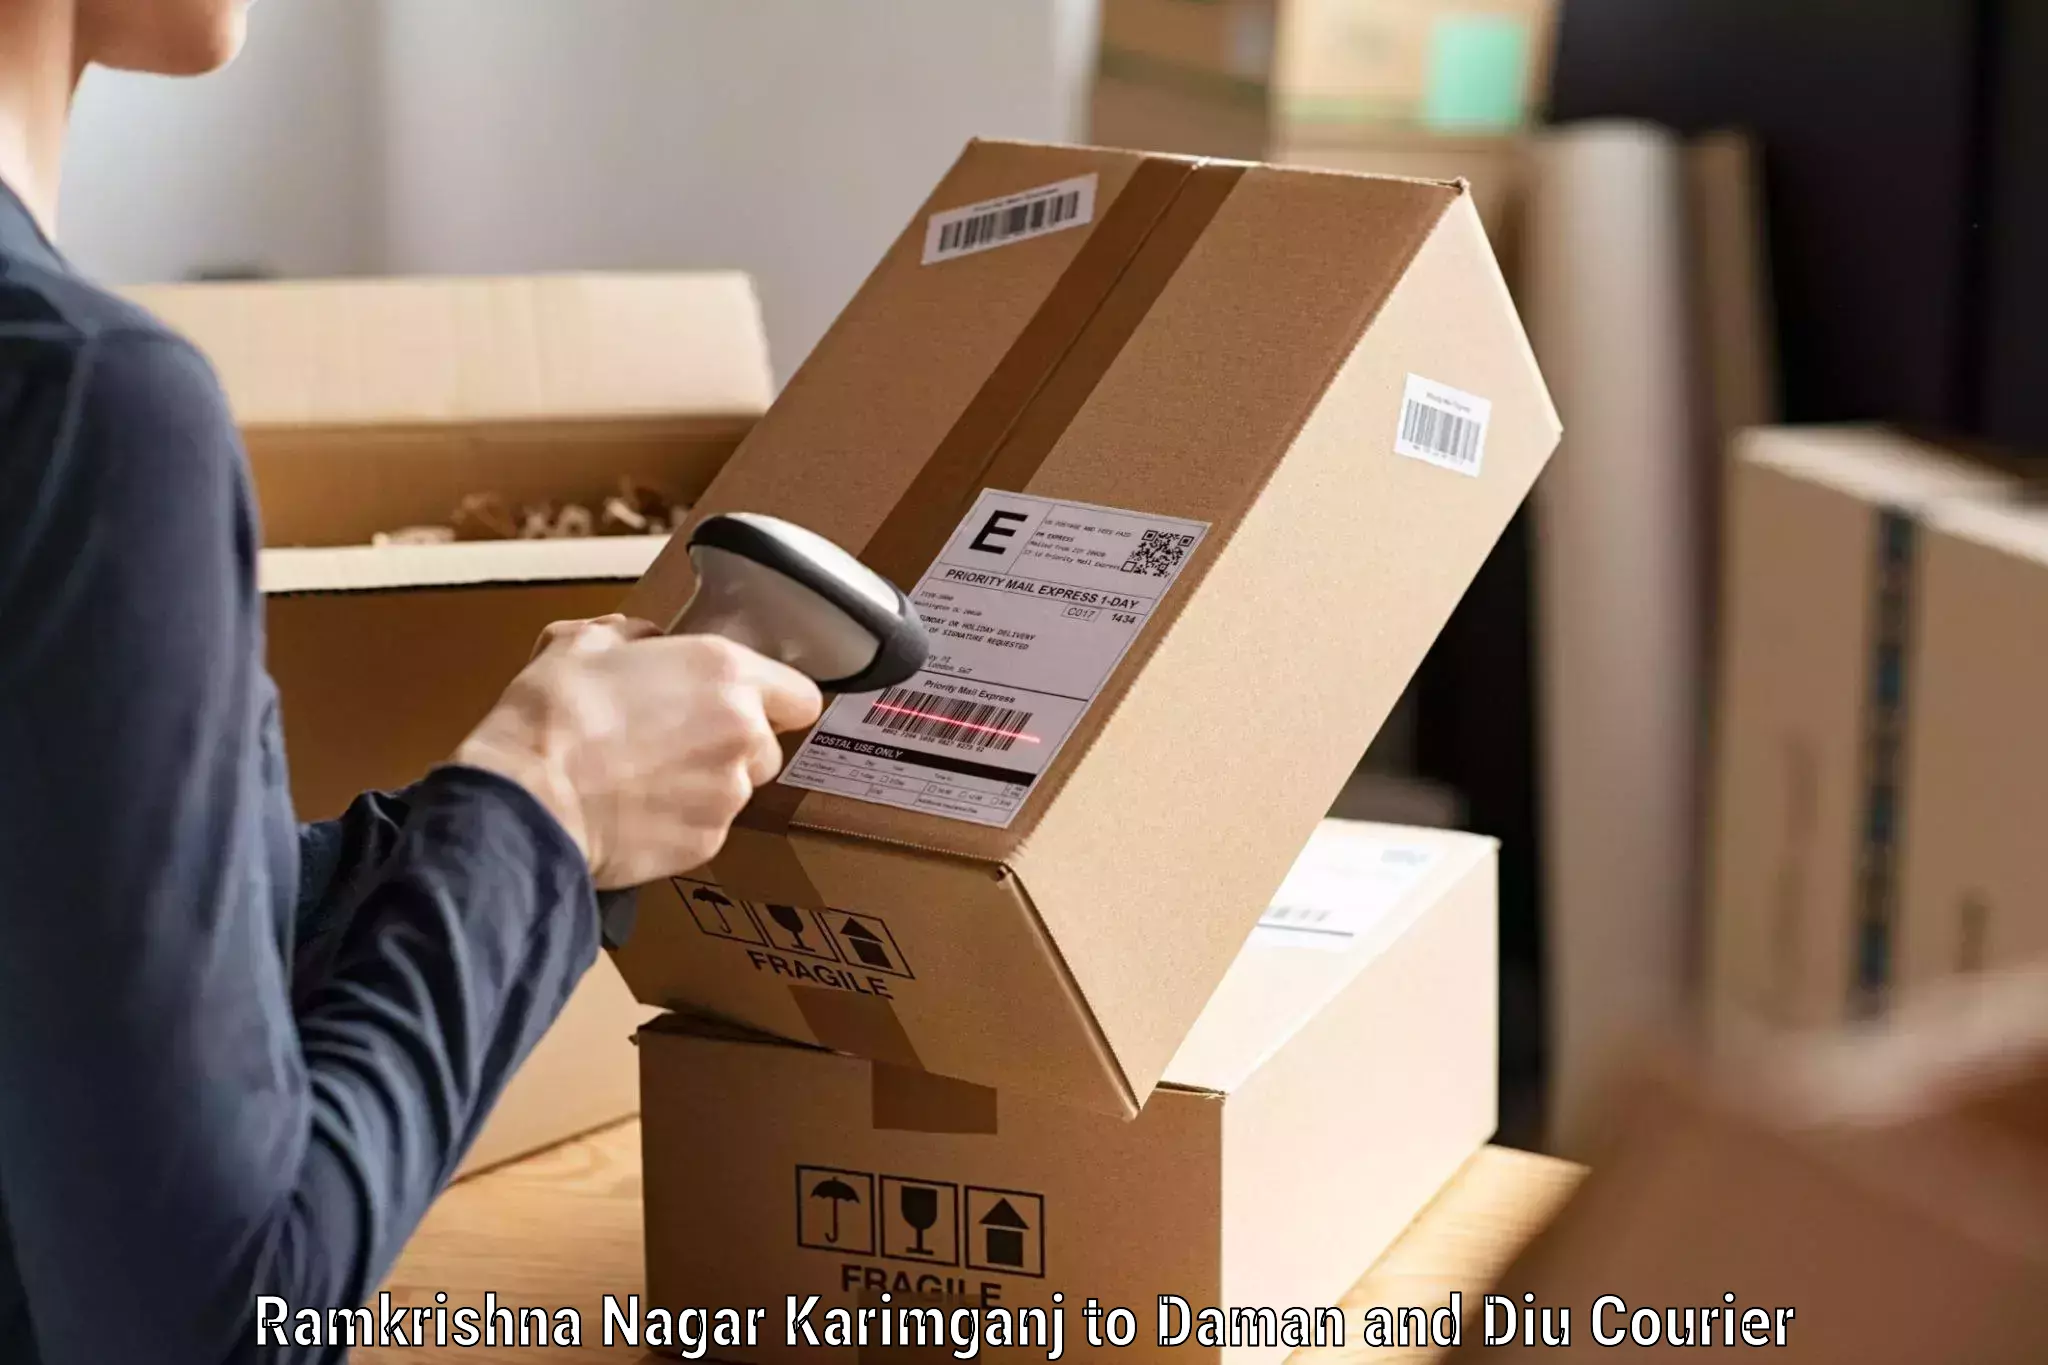 Courier service innovation Ramkrishna Nagar Karimganj to Daman and Diu